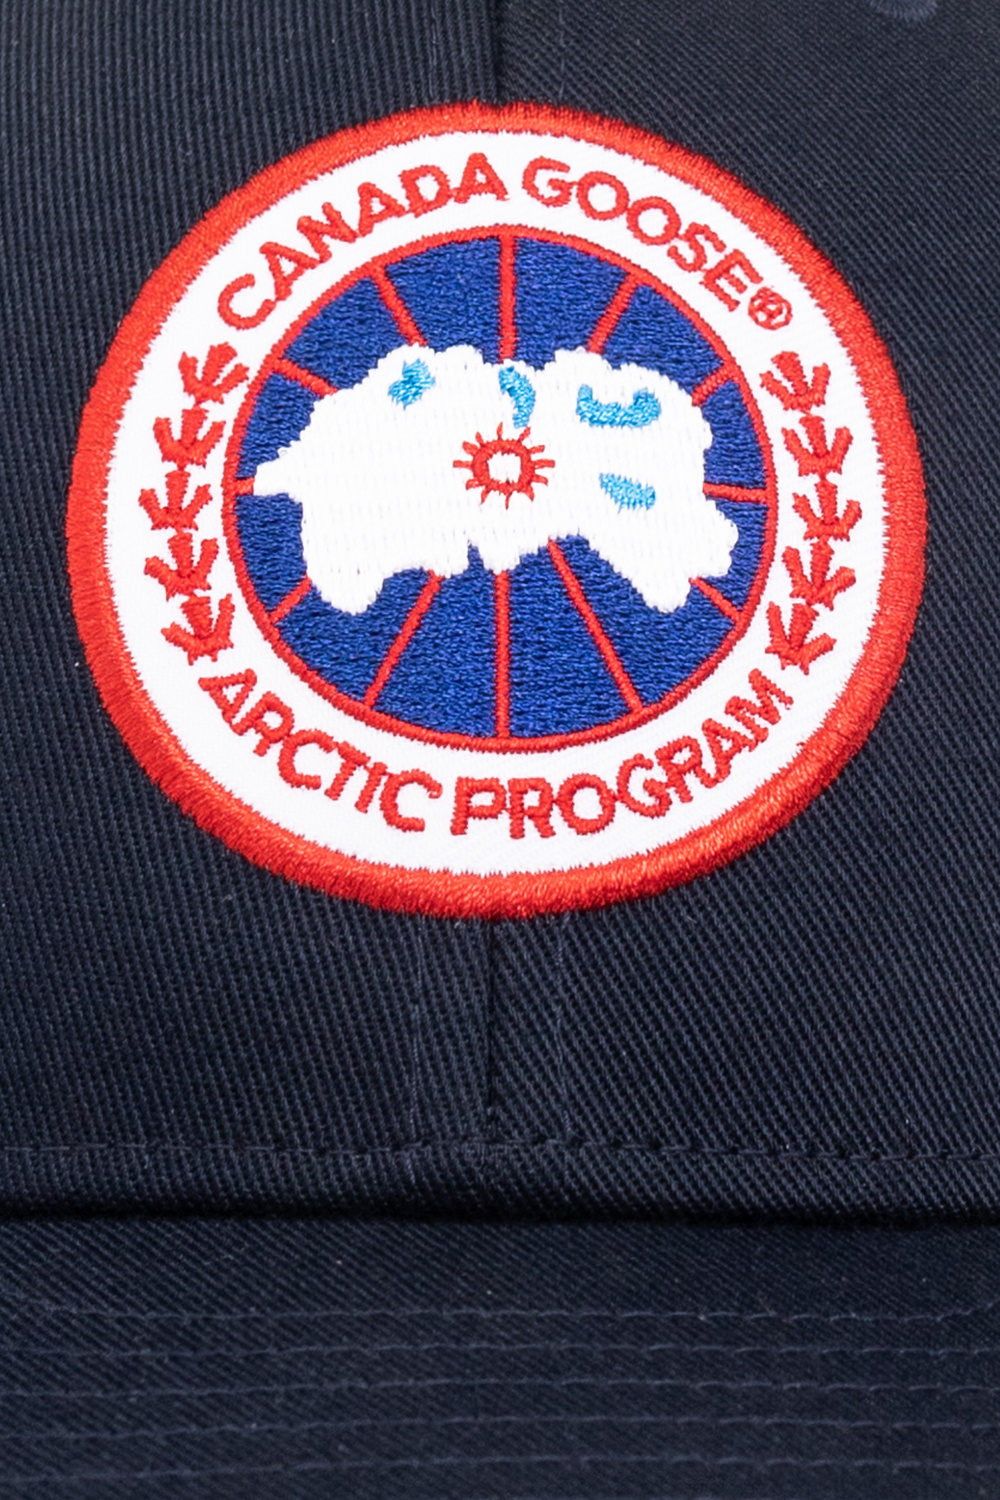 Navy blue Wool beanie with logo Canada Goose - Vitkac Canada